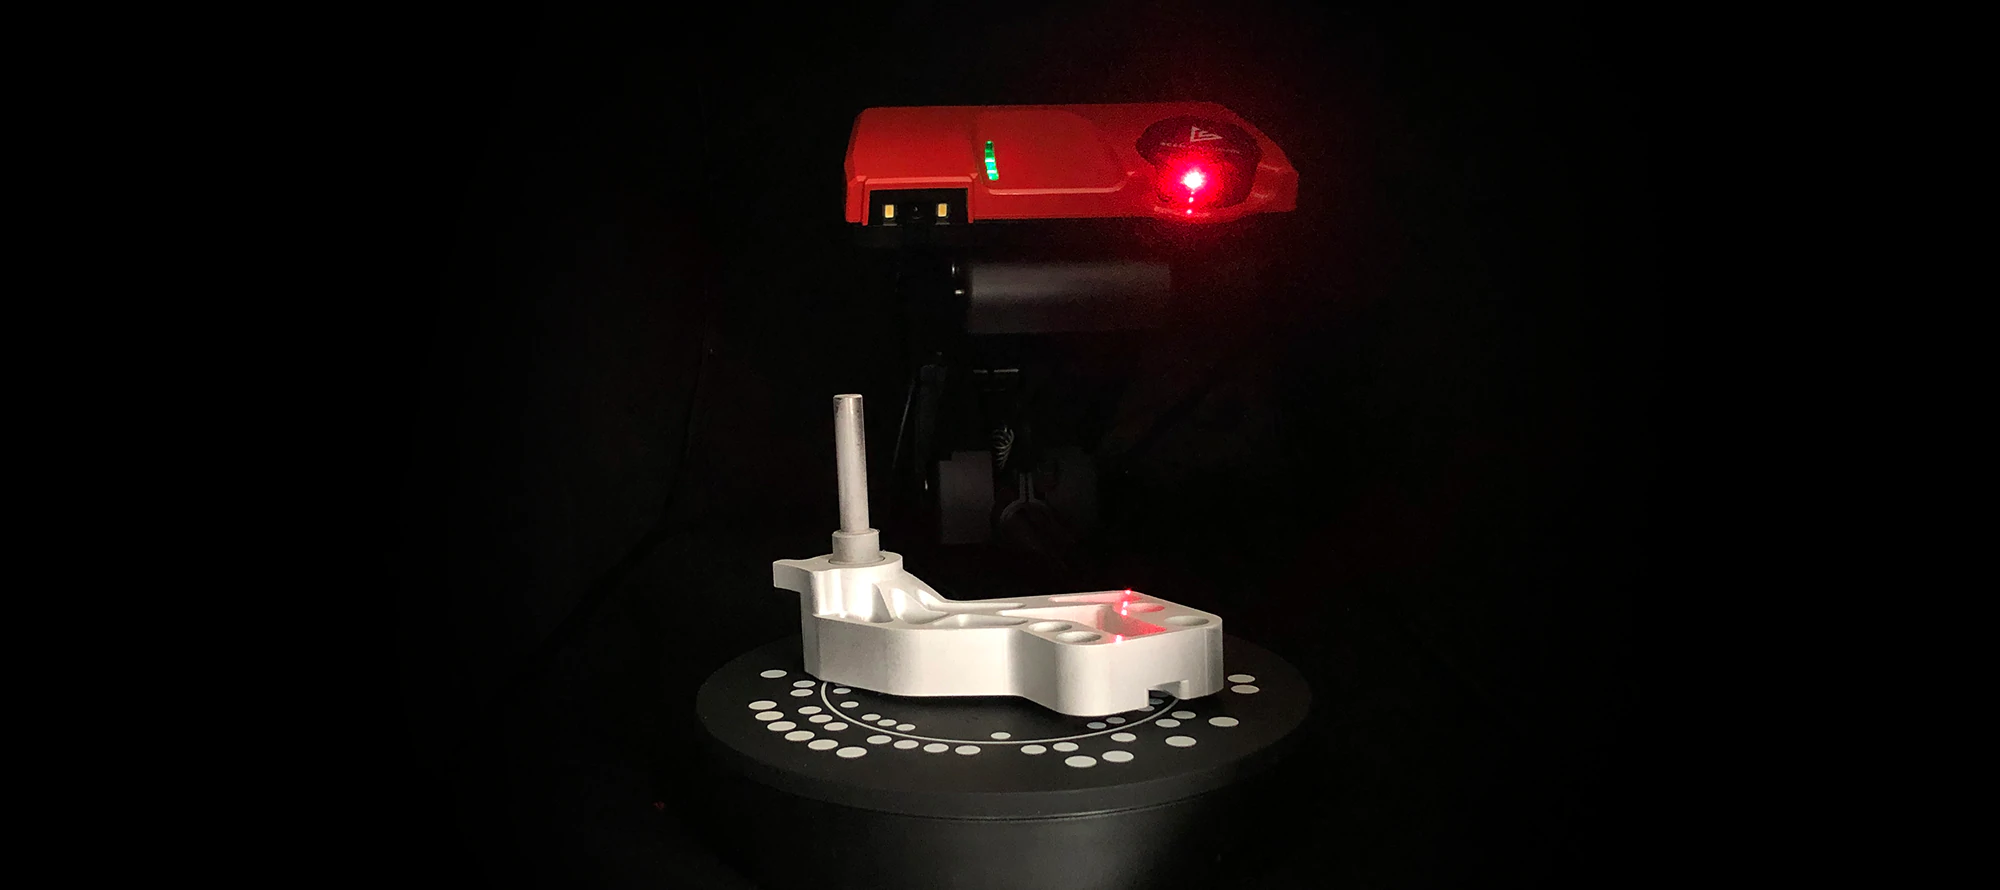 SOL PRO 3D laser scanner with metal part for 3D parts inspection